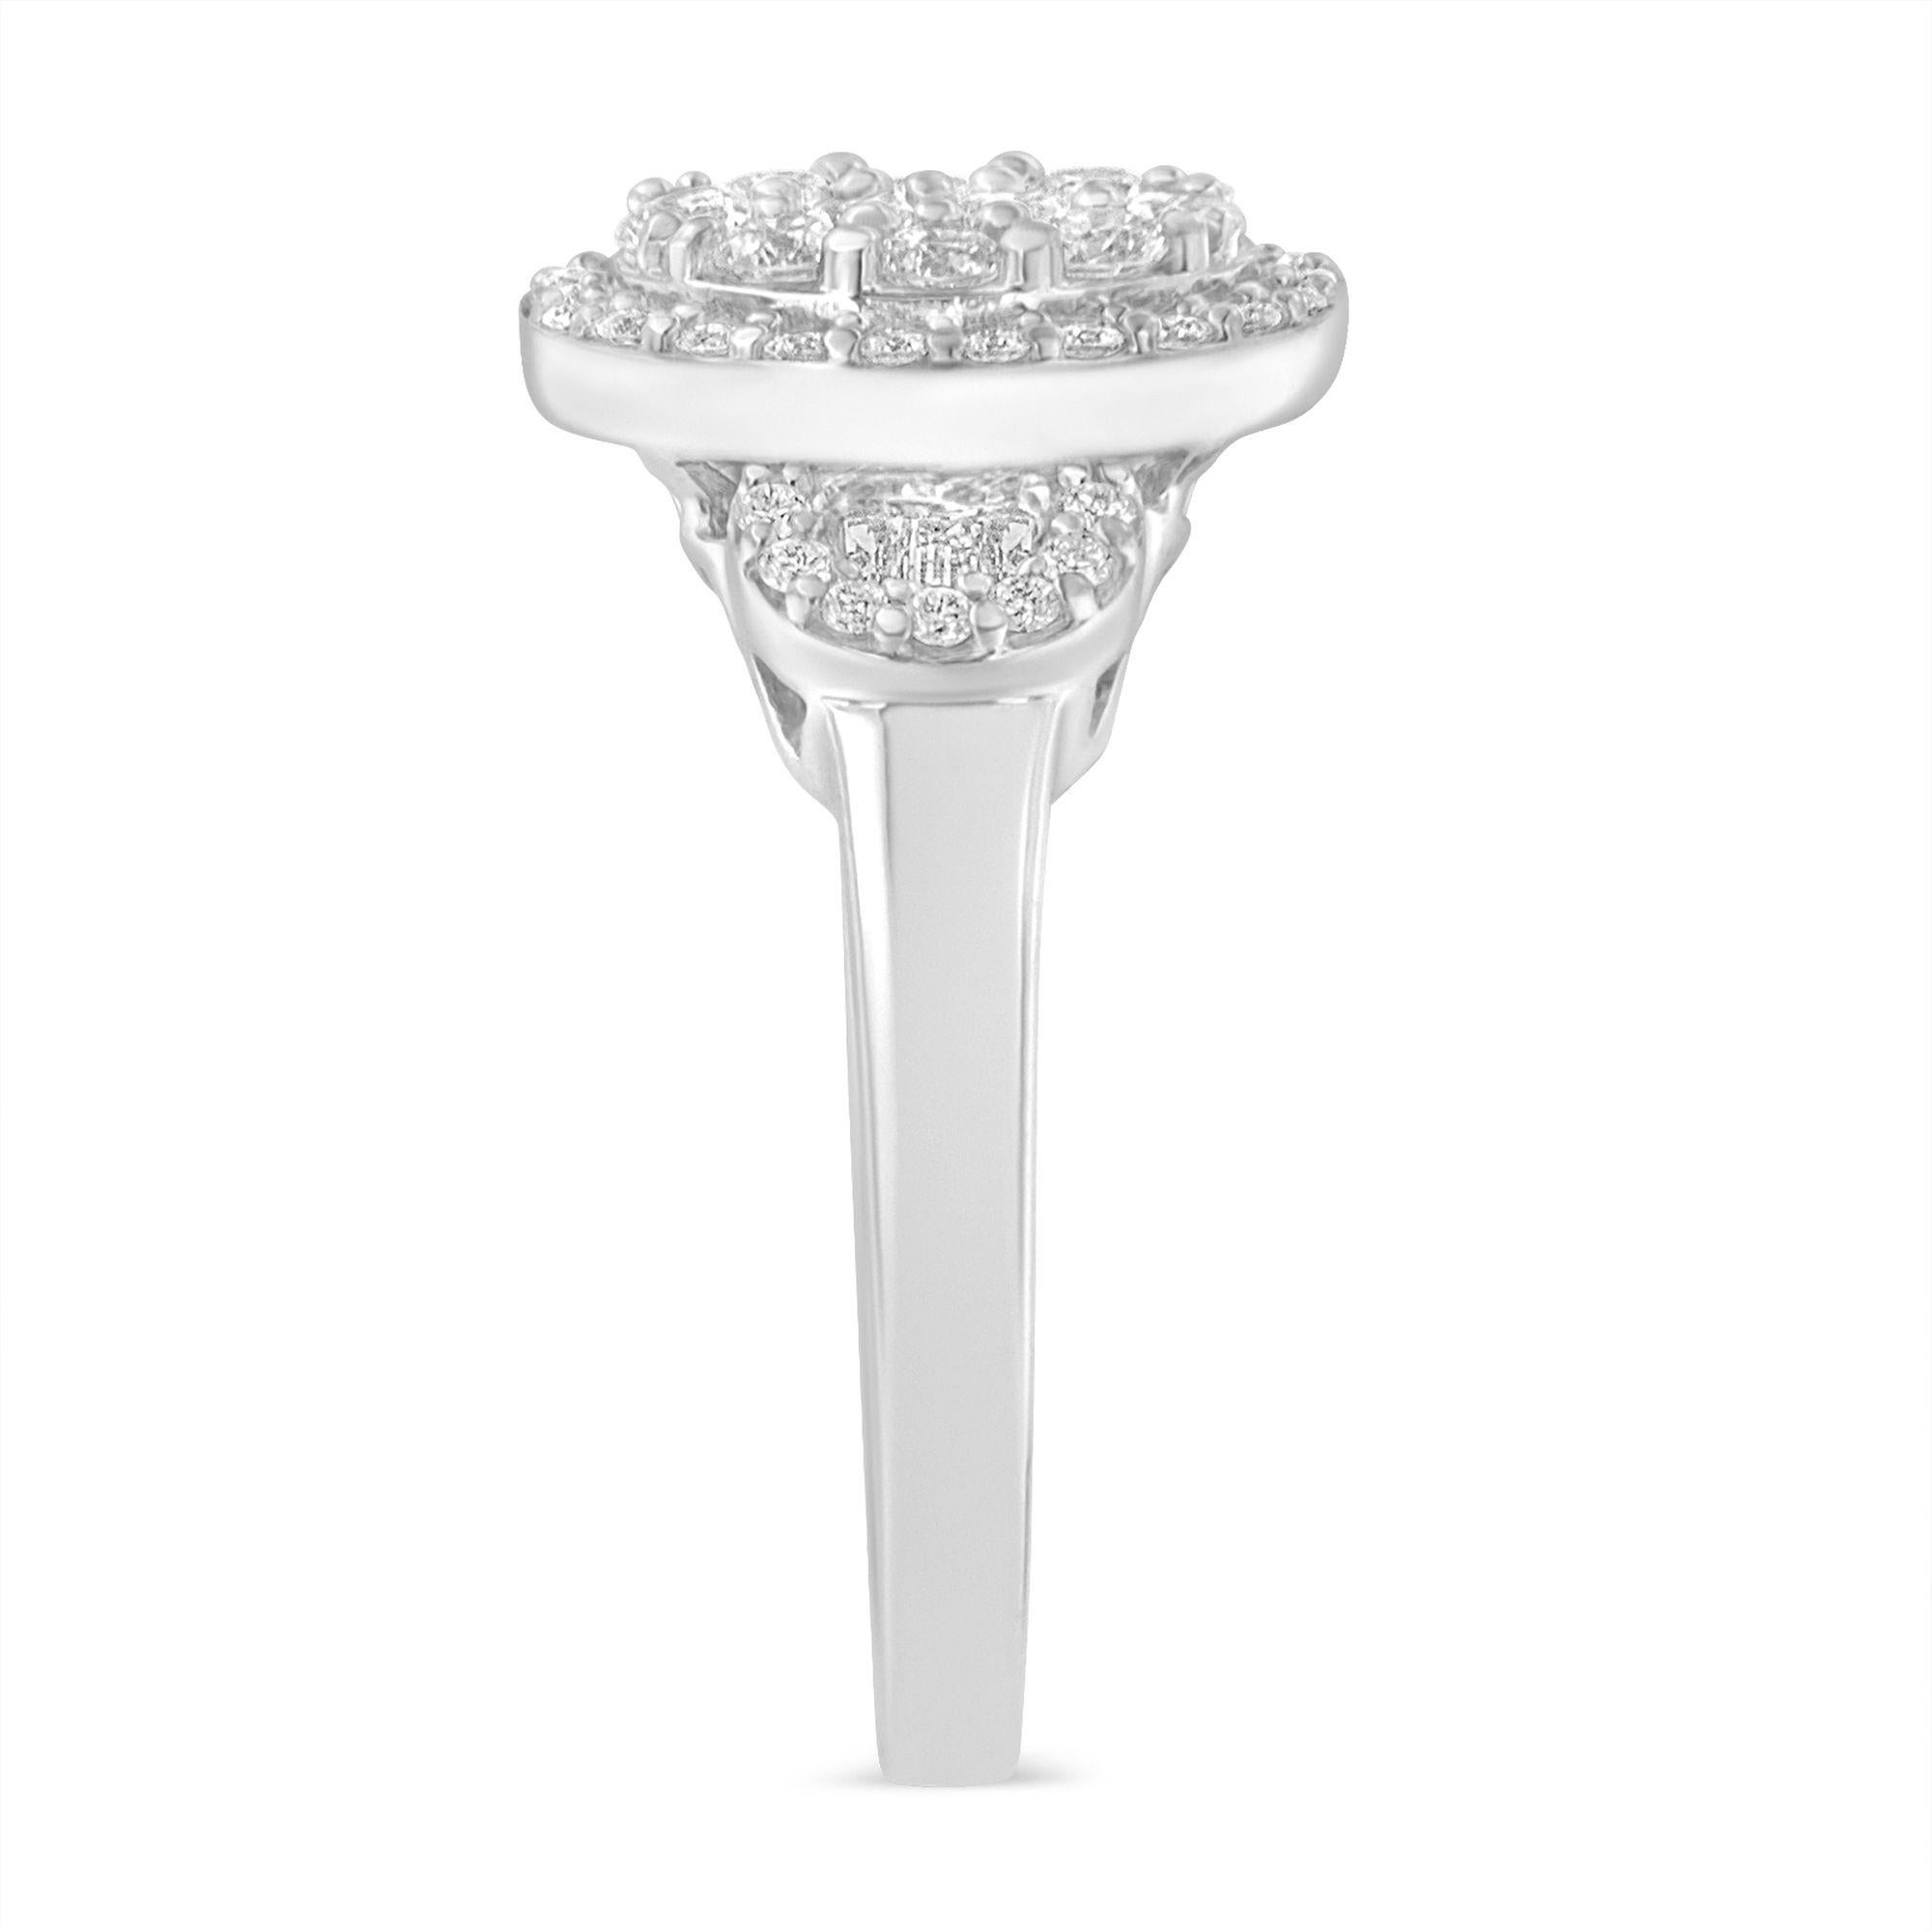 For Sale:  10K White Gold 1.0 Carat Diamond Cluster Ring 5